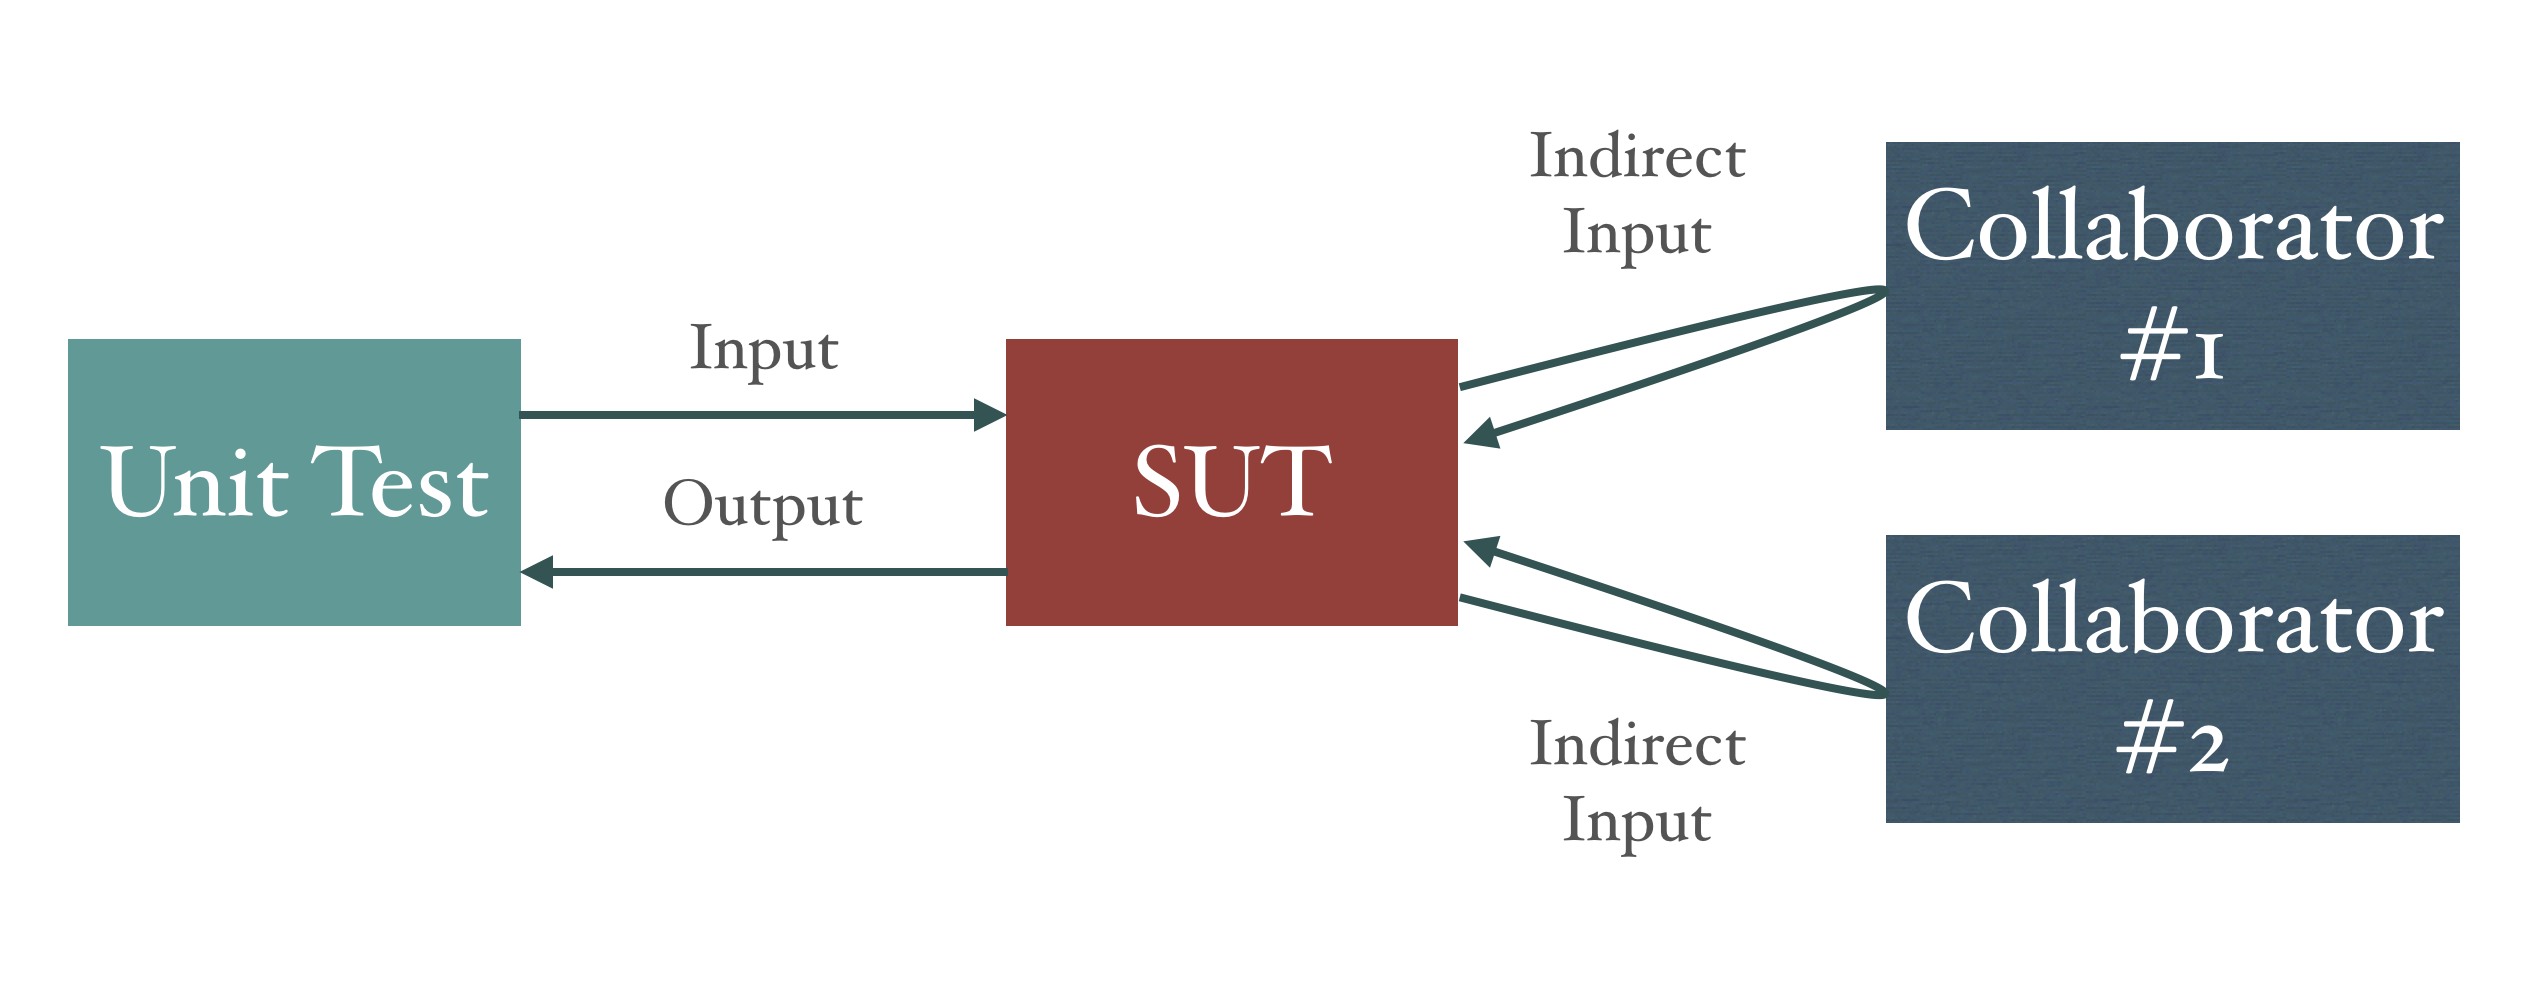 Visualisation of indirect inputs